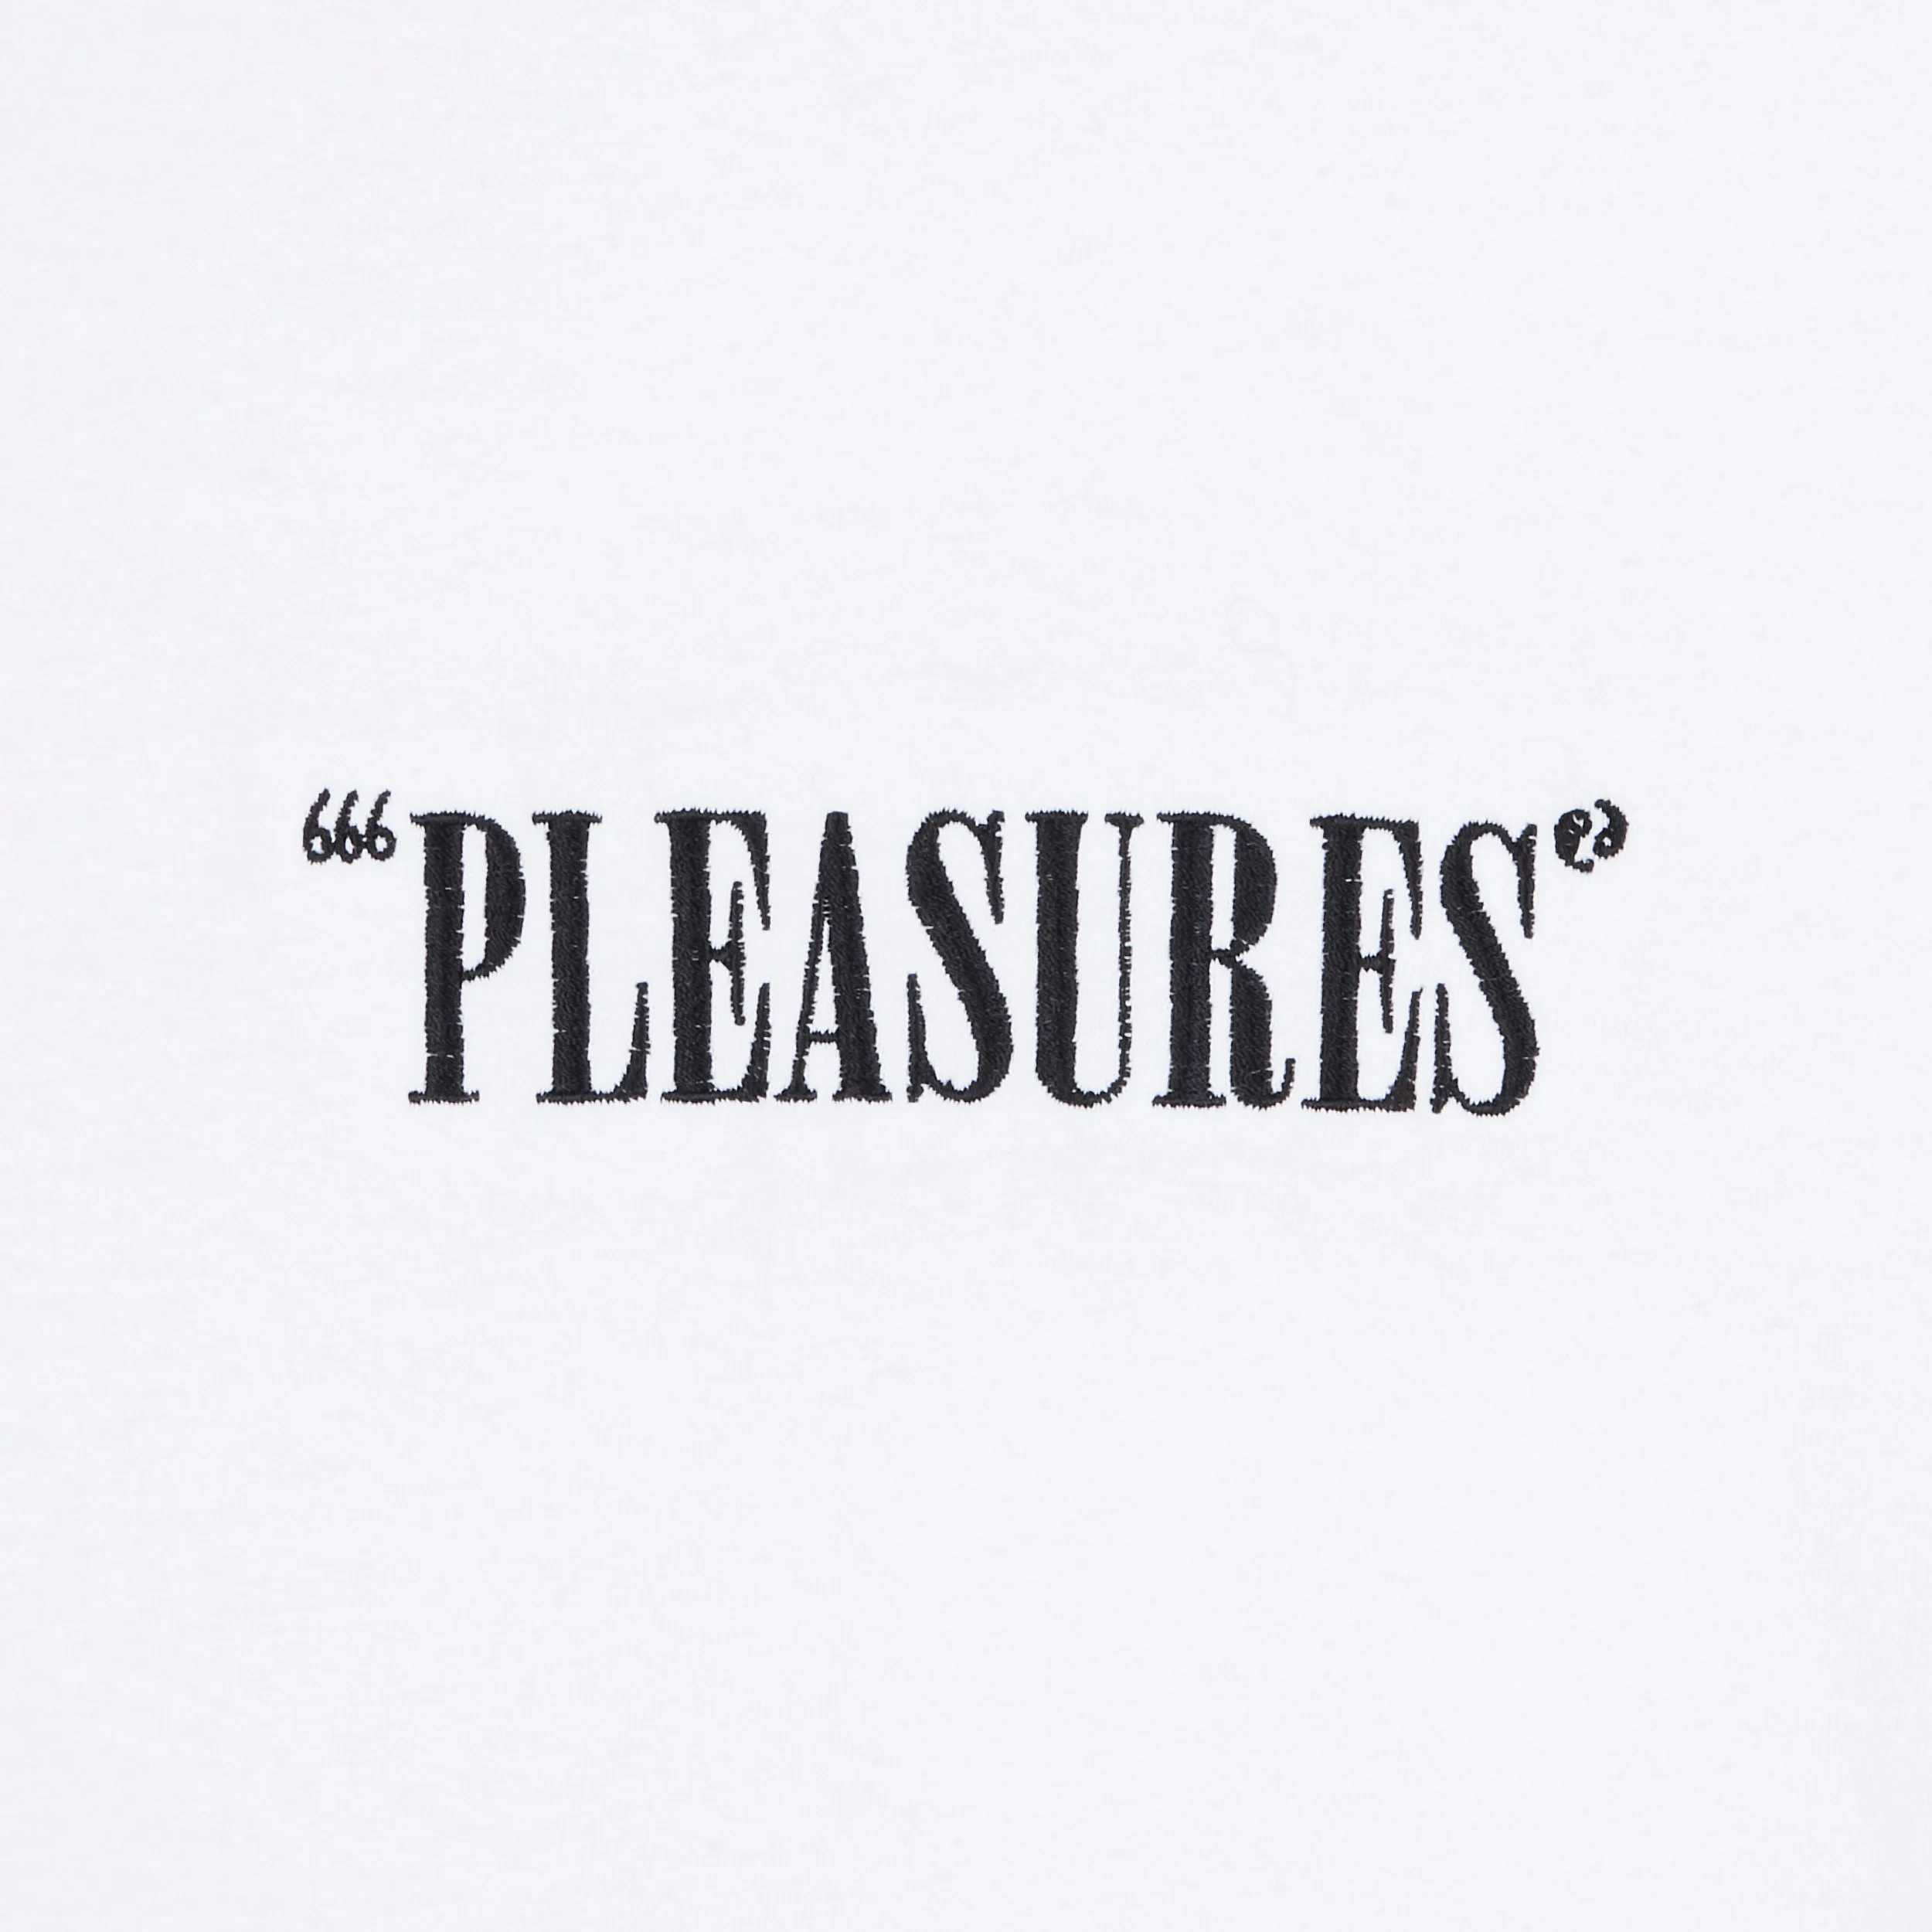 Know pleasure. Pleasures. Known pleasure